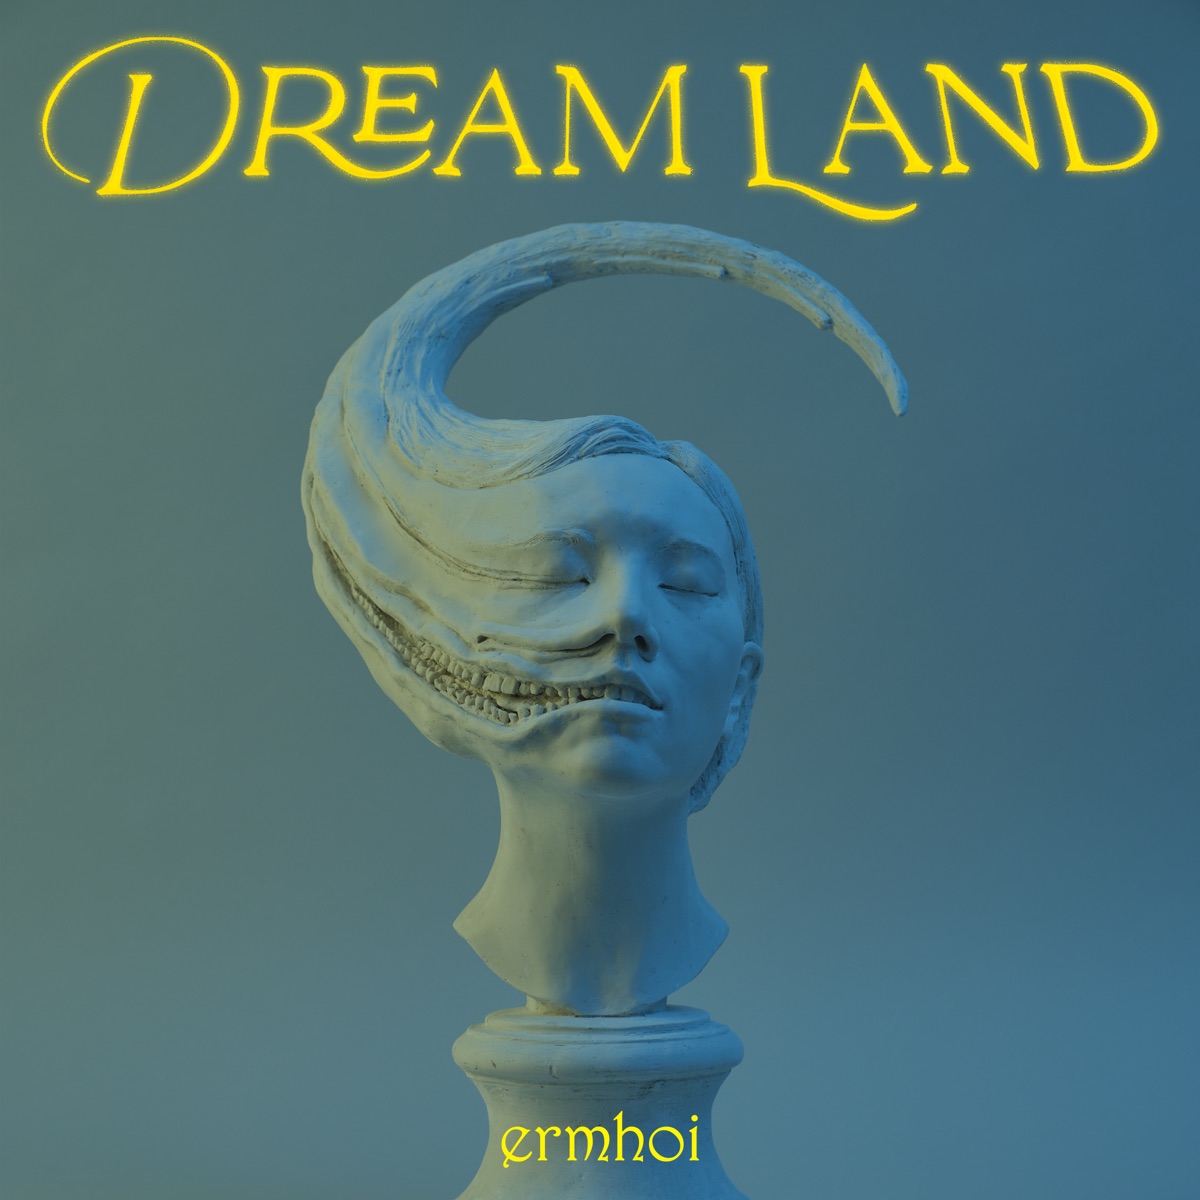 『ermhoi - Dream Land Song』収録の『DREAM LAND』ジャケット